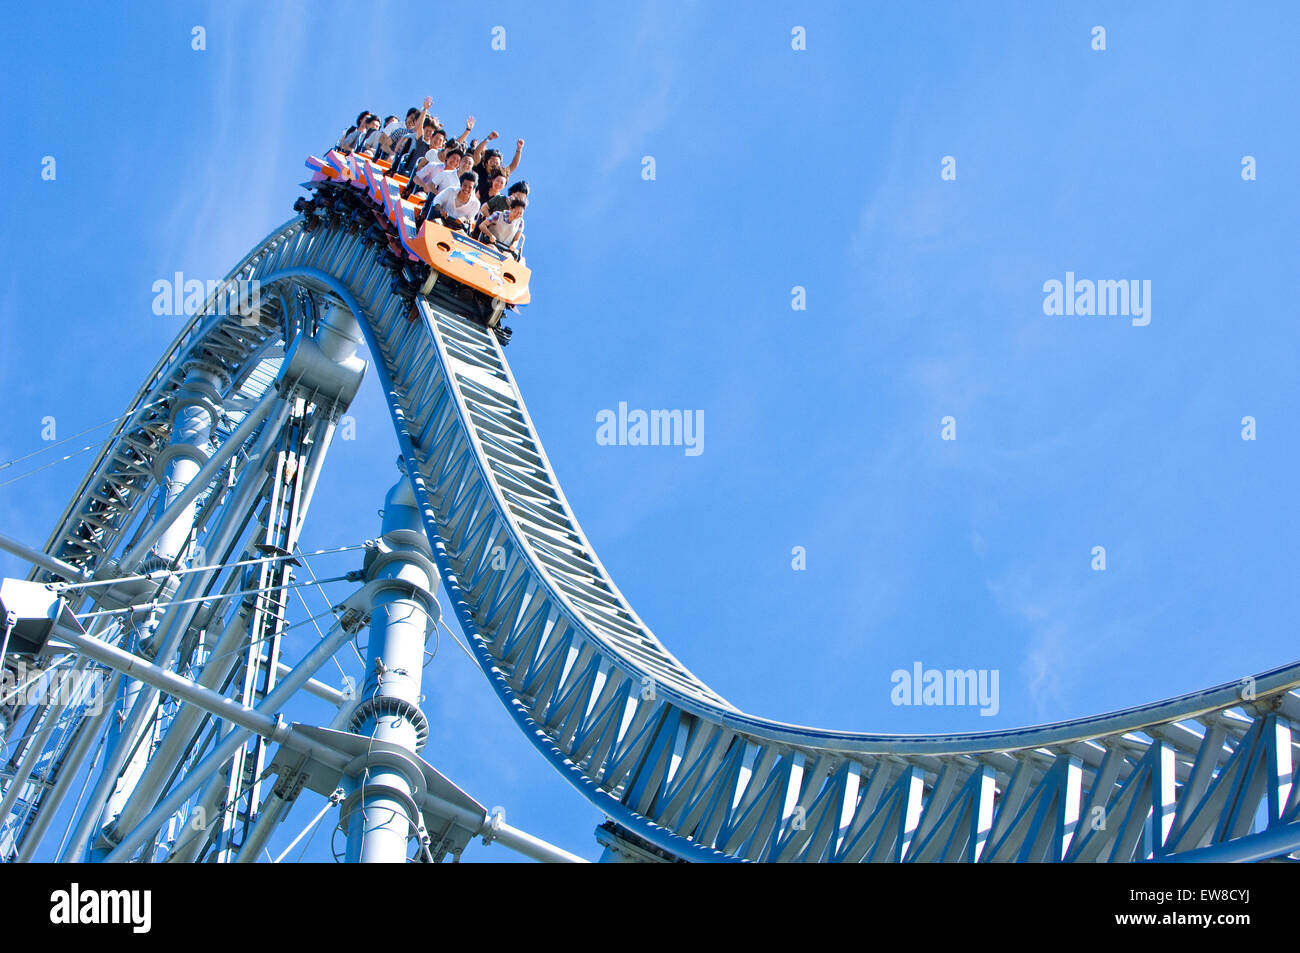 The Thunder Dolphin Roller coaster in Korakuen Amusement Park, Tokyo, Japan  Stock Photo - Alamy